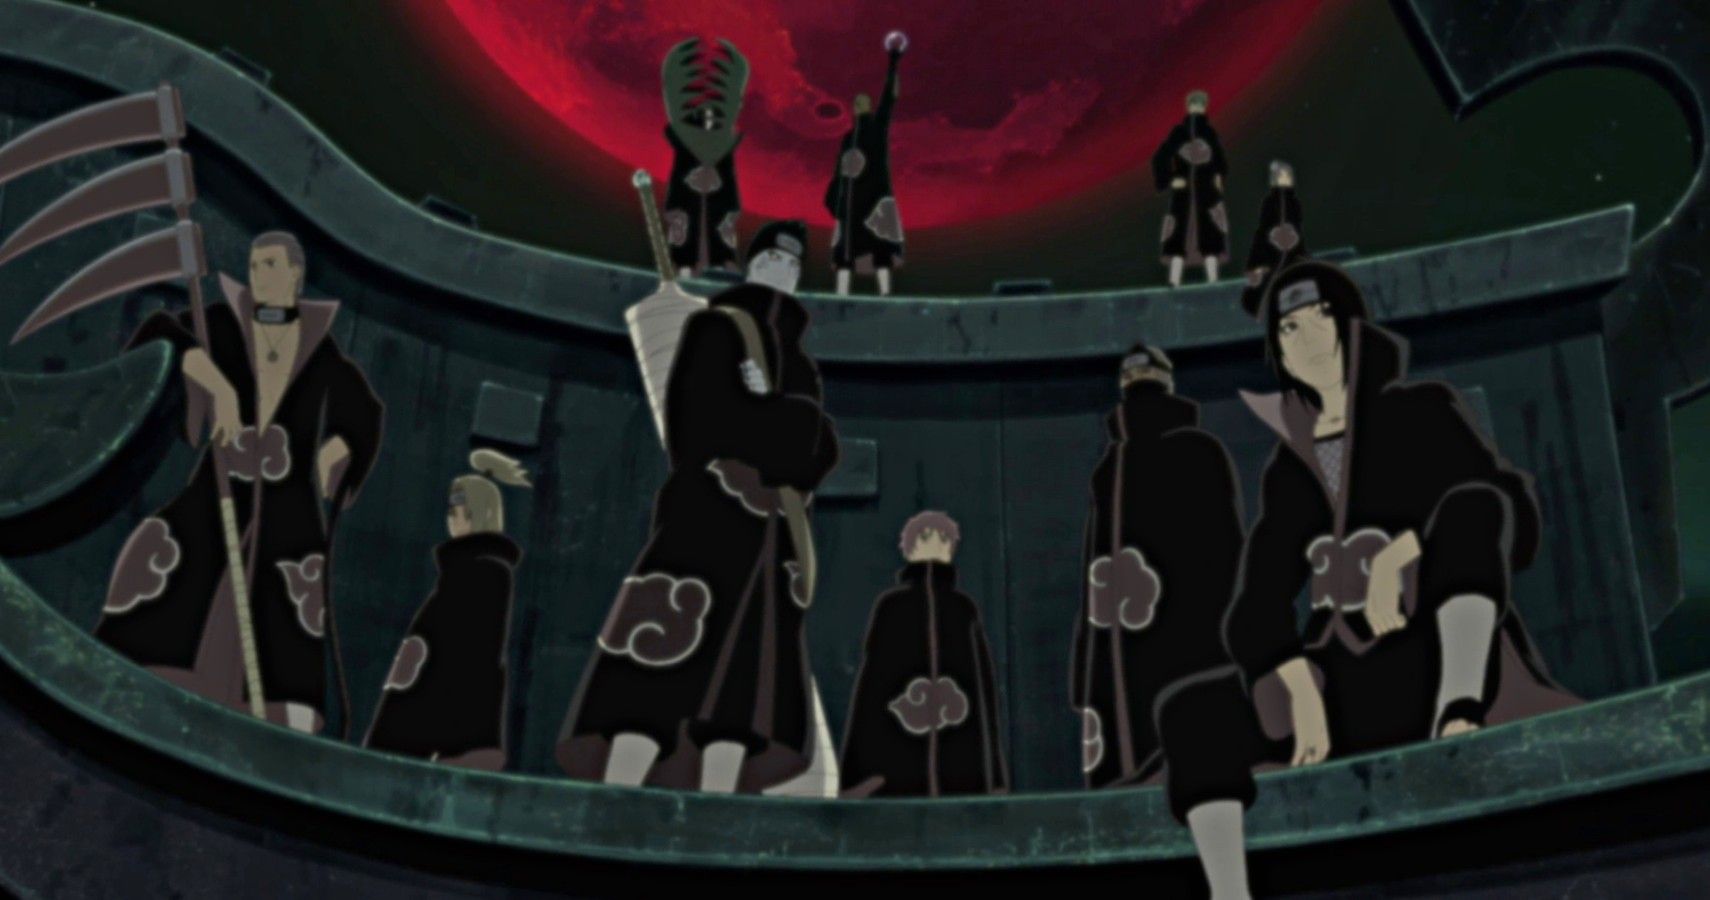 Who created Akatsuki in Naruto?